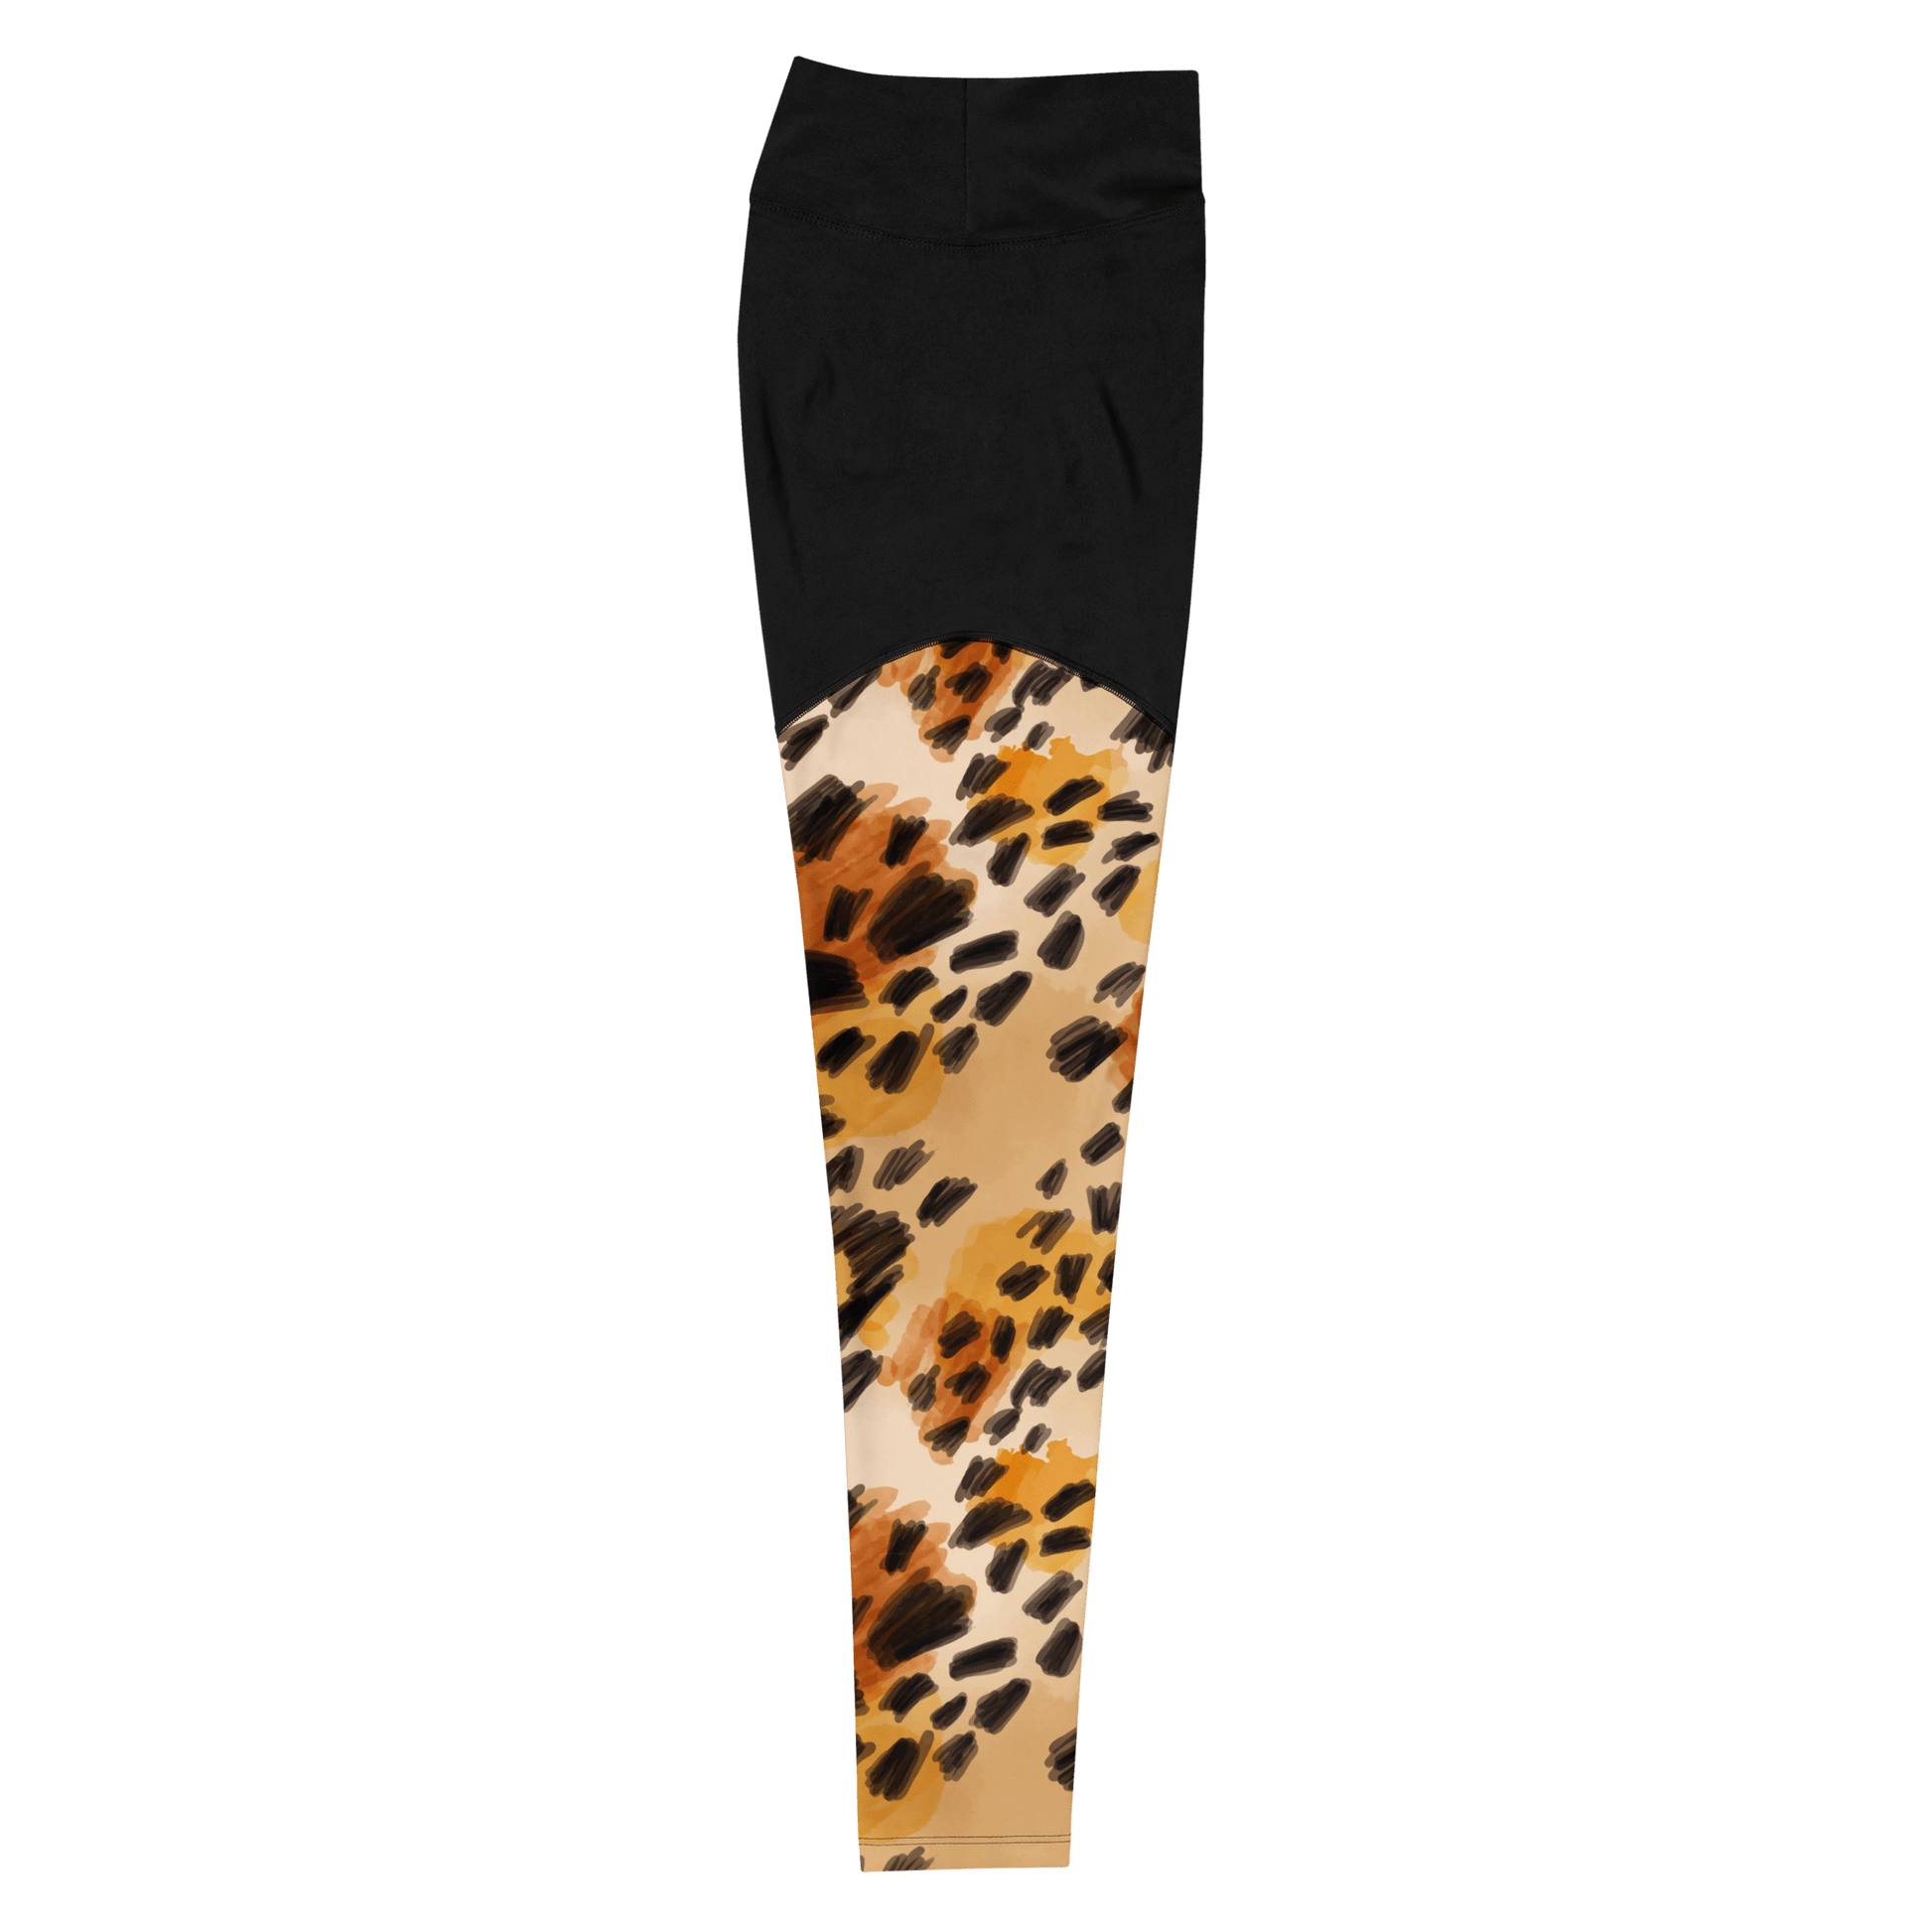 Sahara Desert Tigard Hybrid - Compression Sports Leggings - Sports Leggings - GYMLEGGS LLC